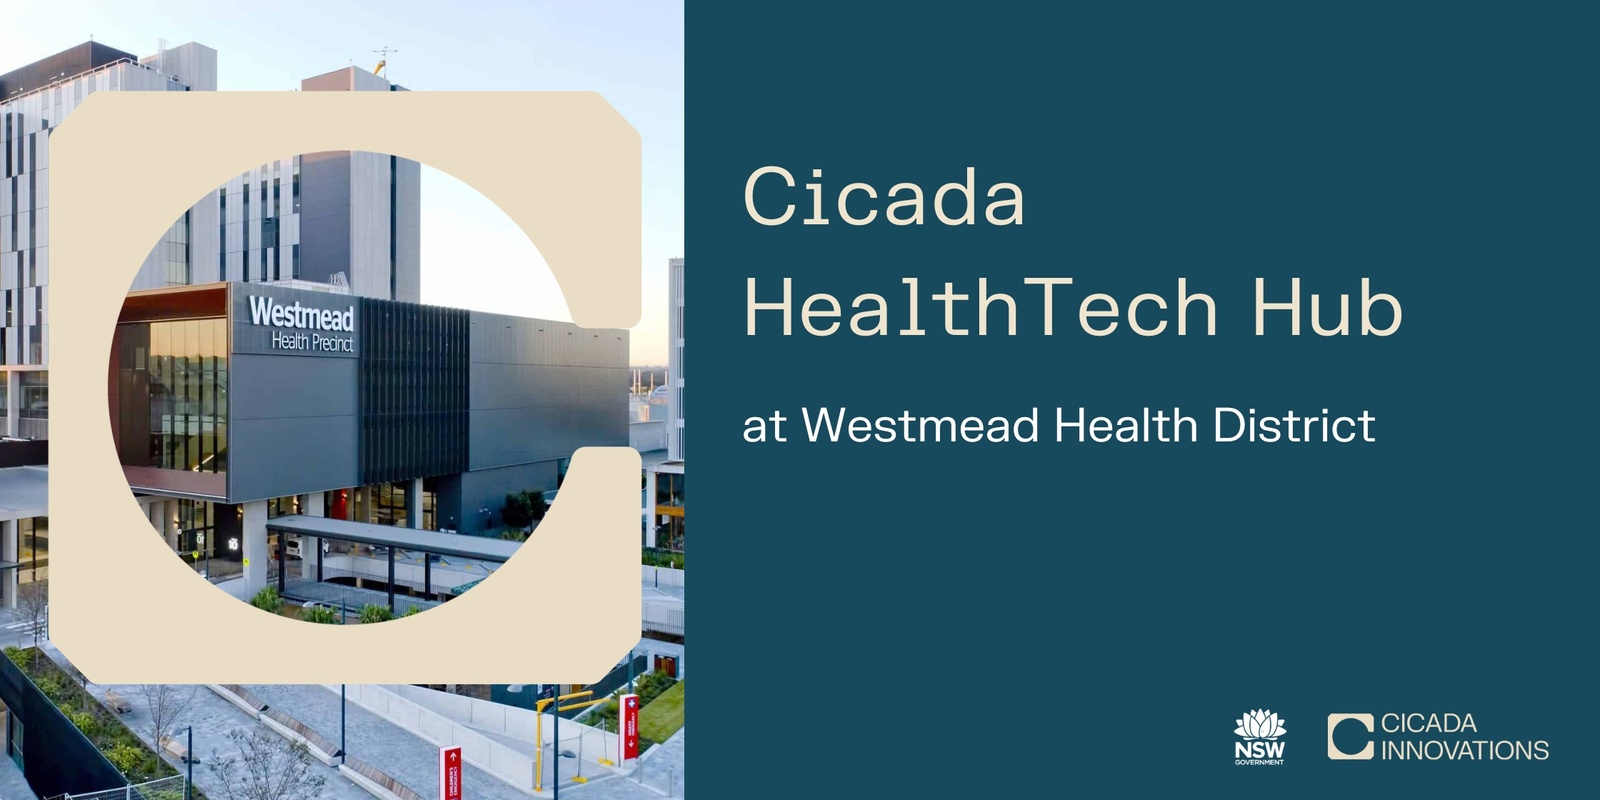 Cicada Health Tech Hub 's banner